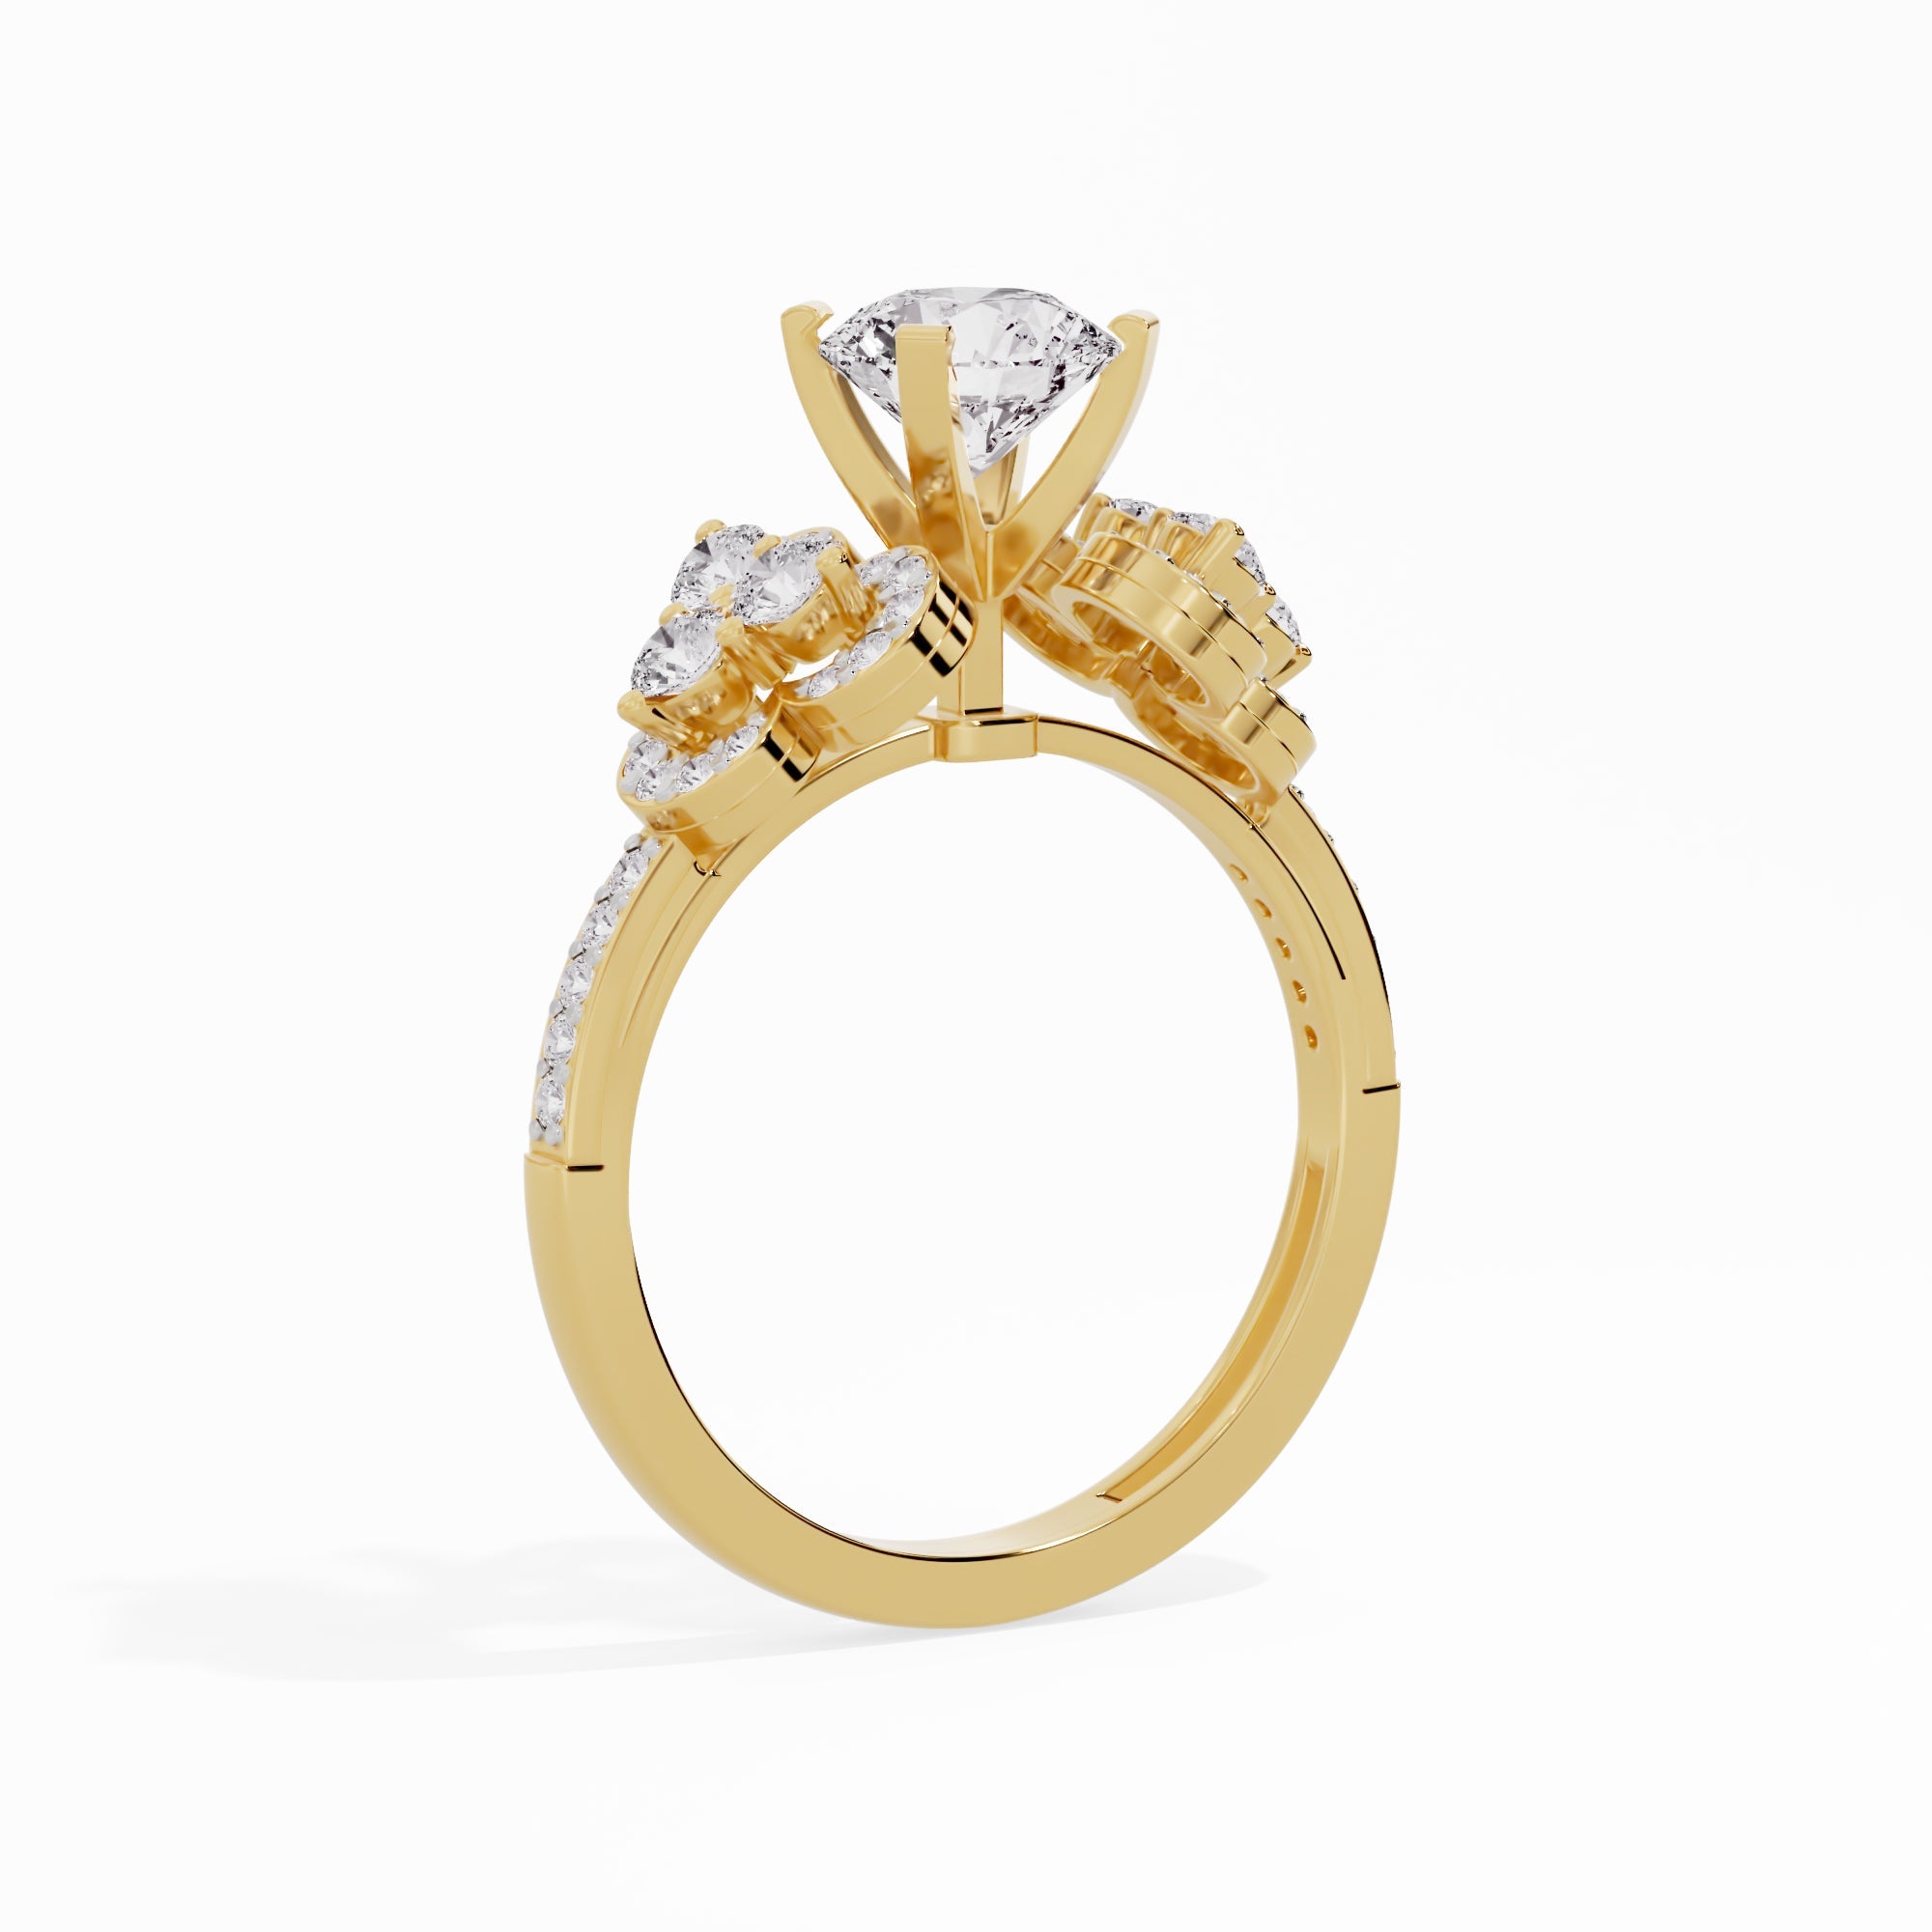 Vintage Romance Diamond Ring